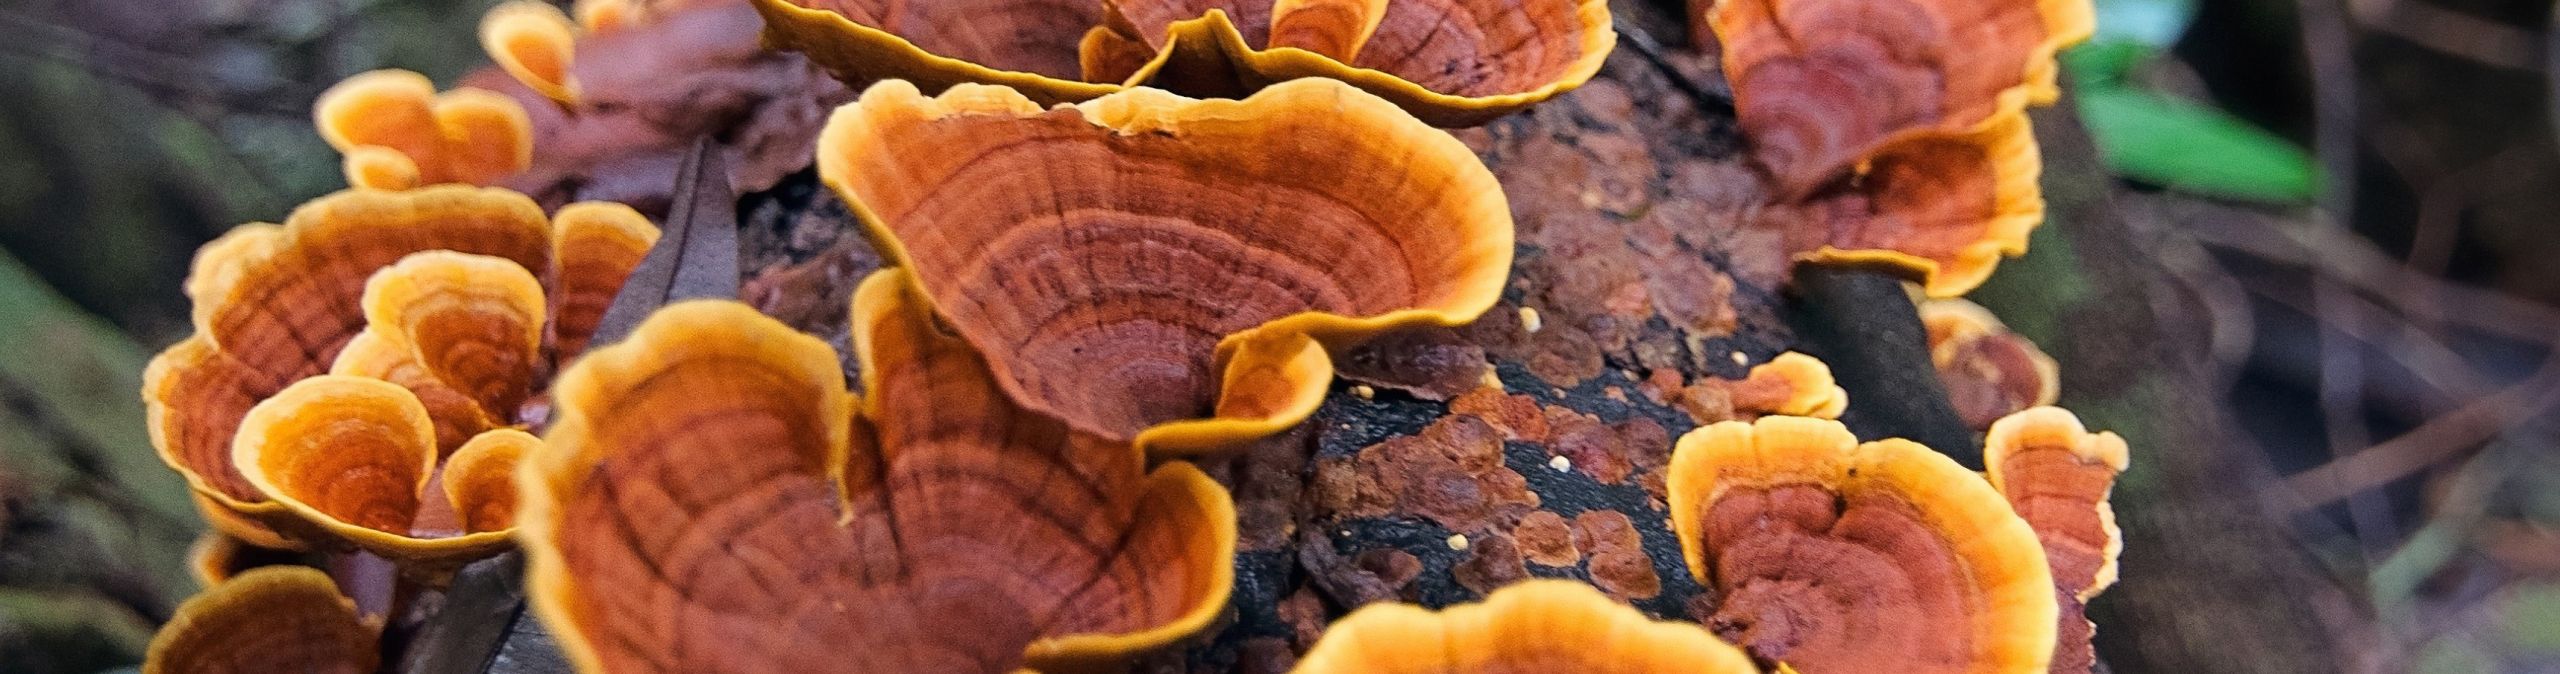 Rainforest fungi
Photographer: Charlotte Hellings